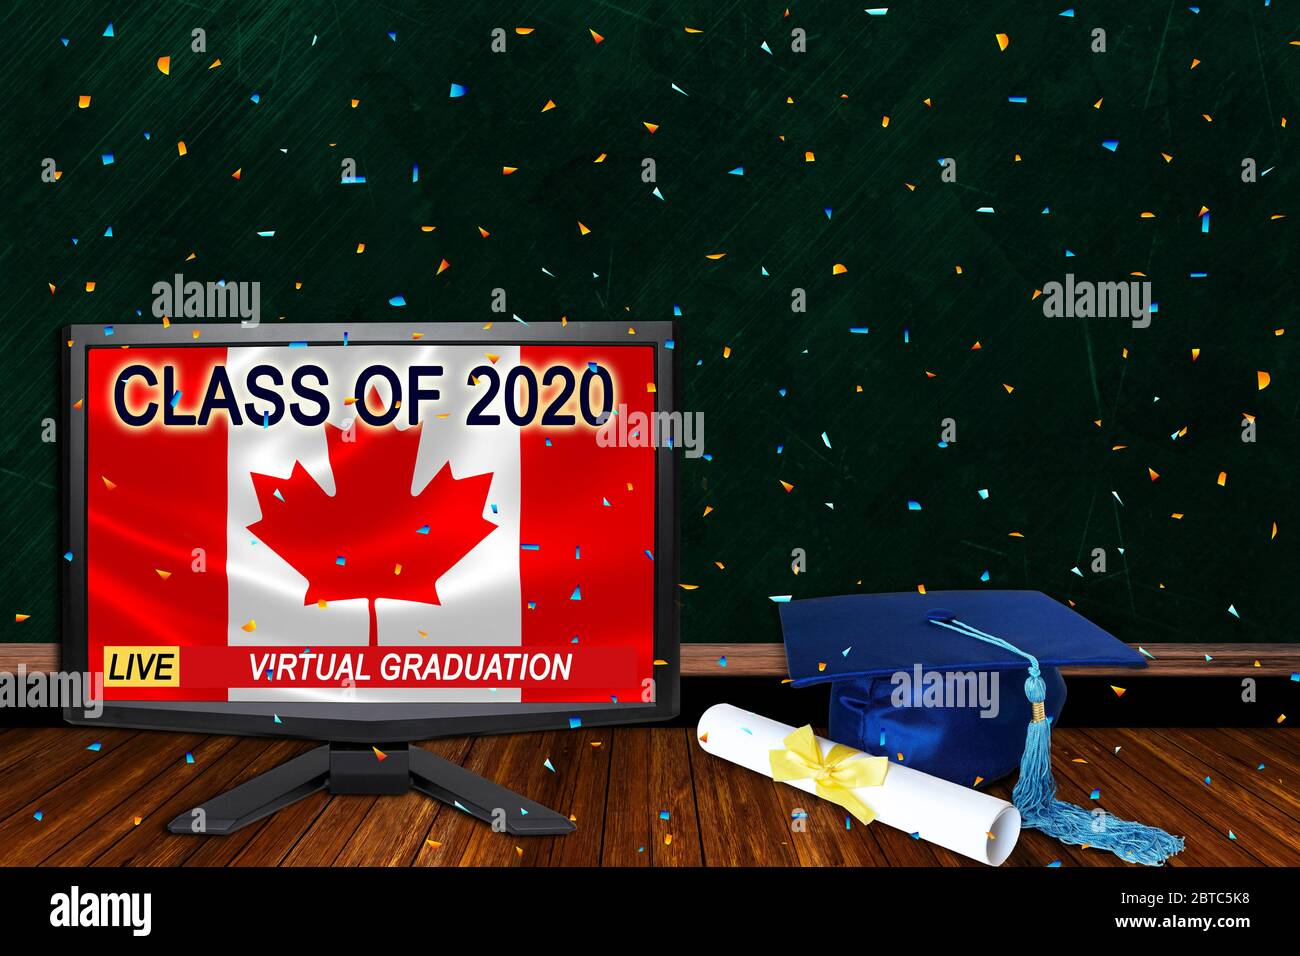 Canadá clase de 2020 ceremonias de graduación virtual concepto para estudiantes de secundaria o universitarios y graduados universitarios debido al coronavirus Covid-19. Li Foto de stock